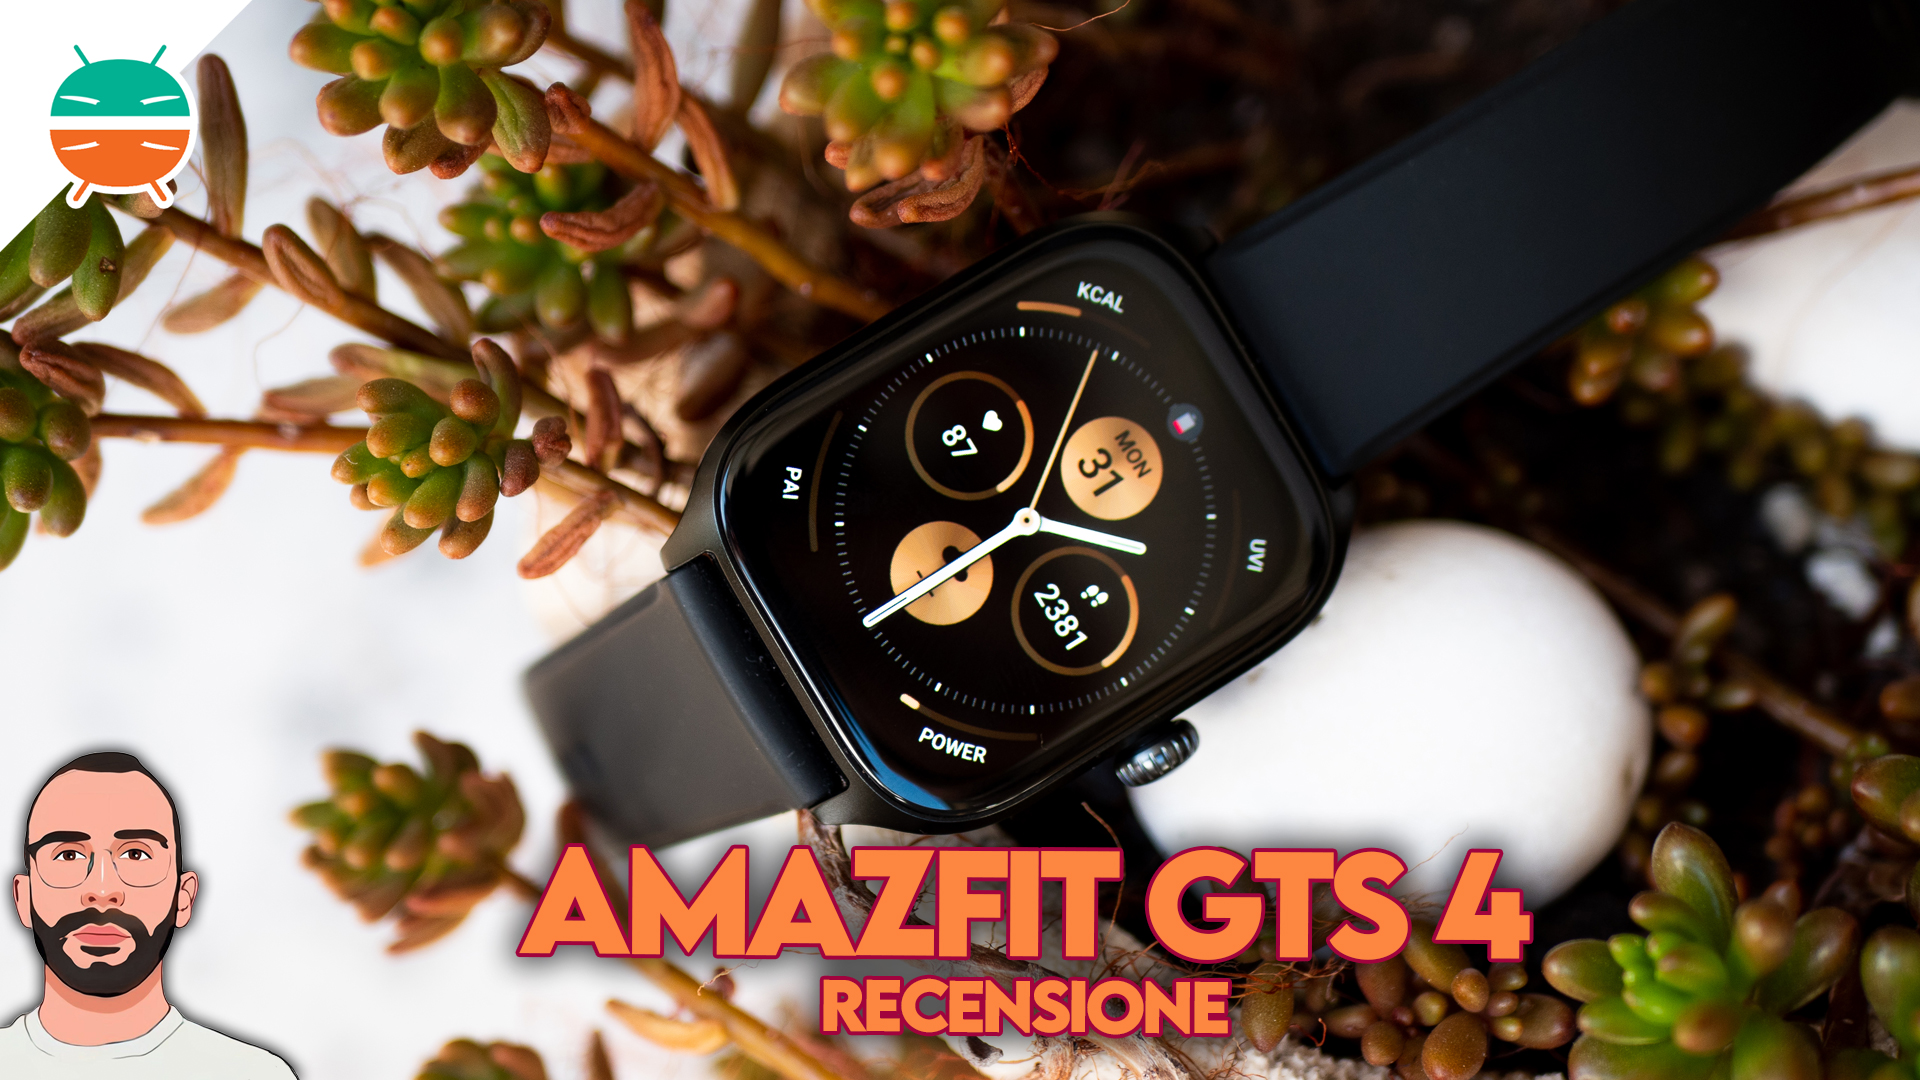 Amazfit GTS 4 – Amazfit-eu